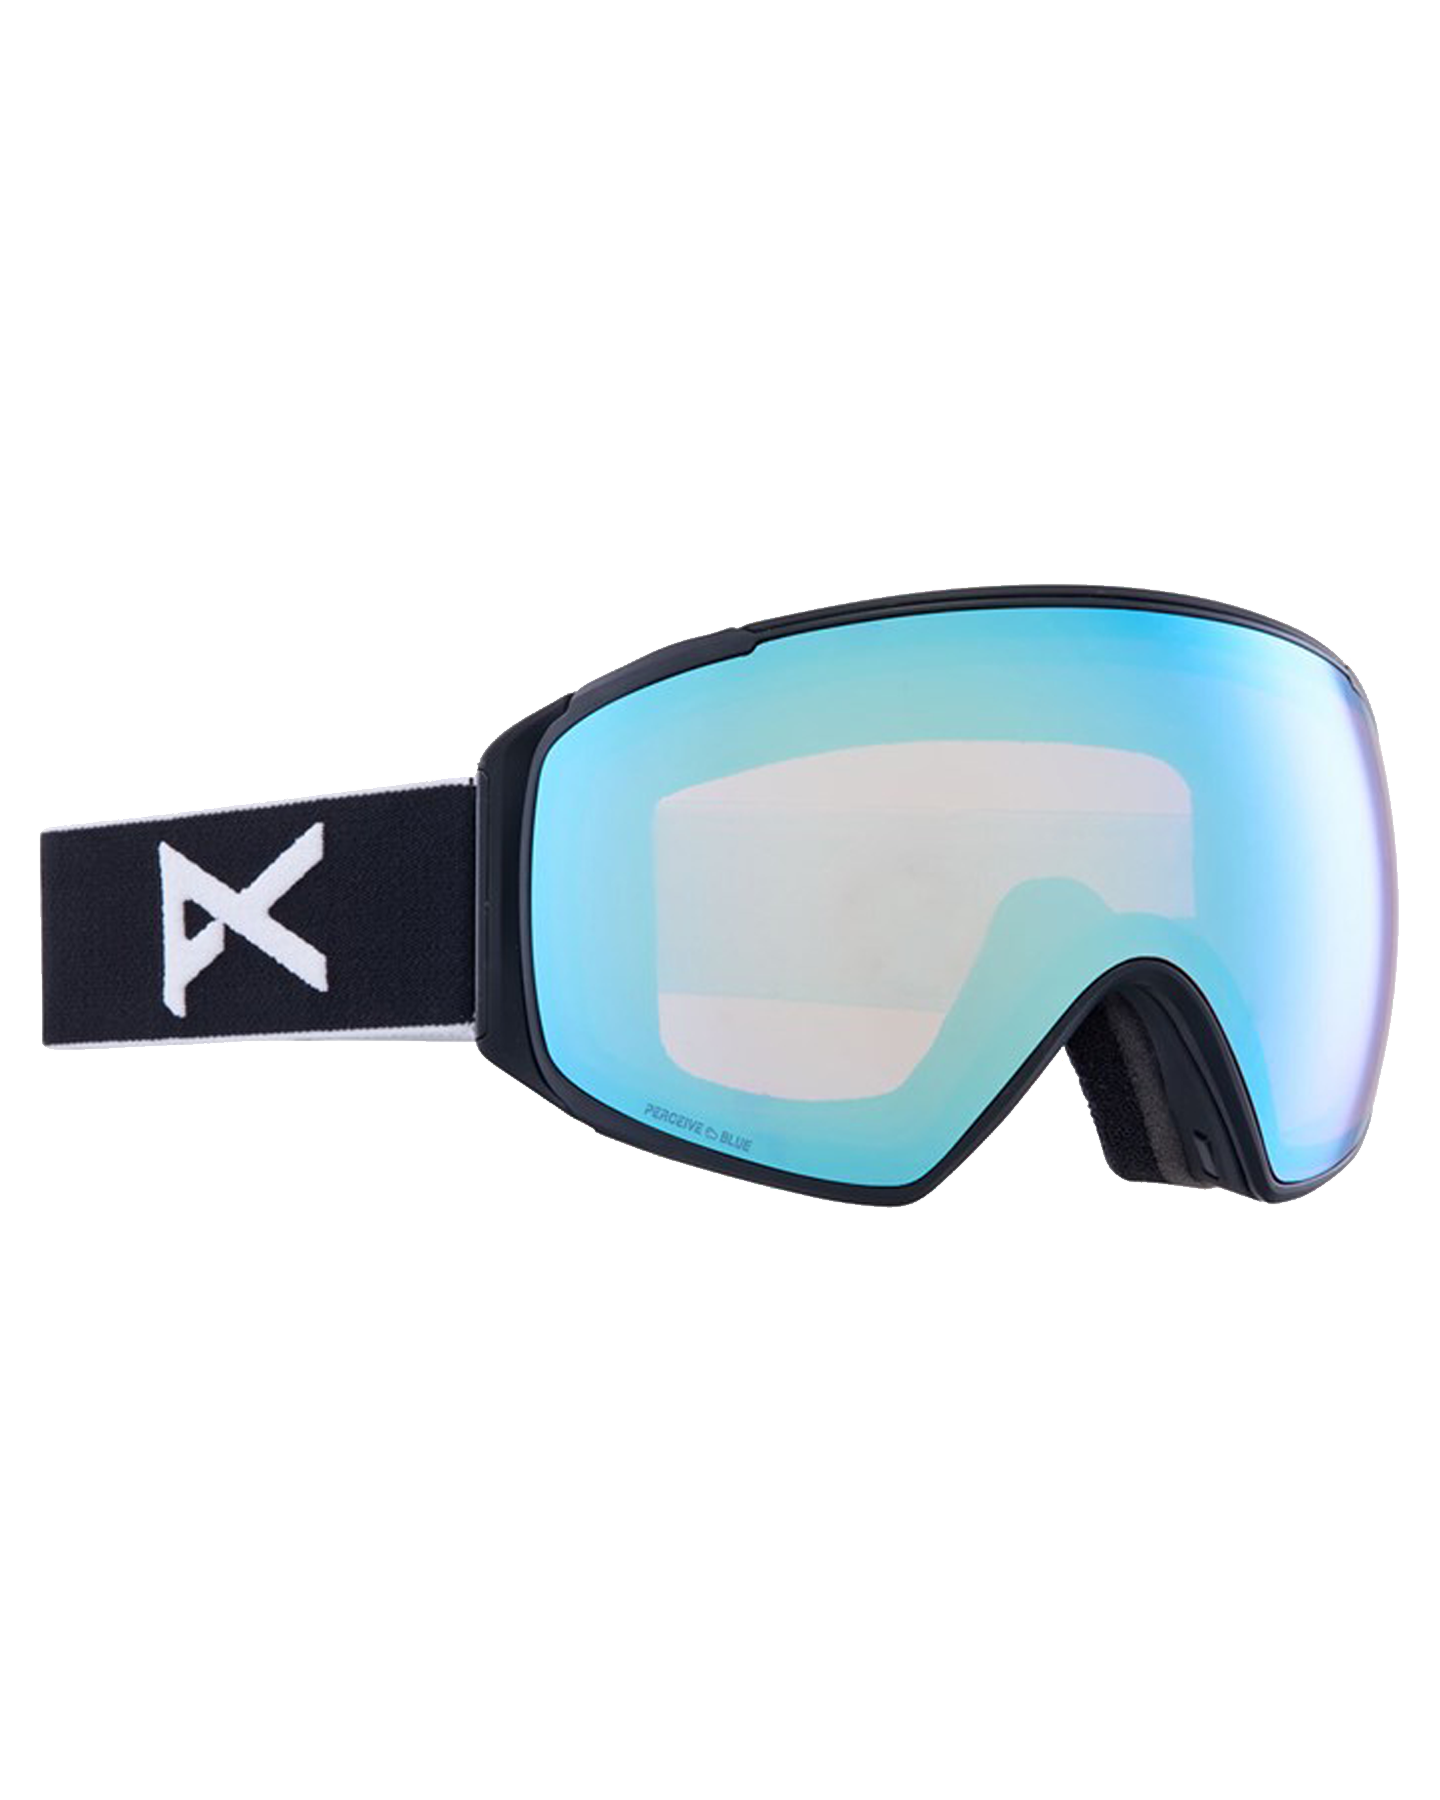 Anon M4 Toric Snow Goggles + Bonus Lens + MFI - Black / Perceive Variable Blue Men's Snow Goggles - SnowSkiersWarehouse